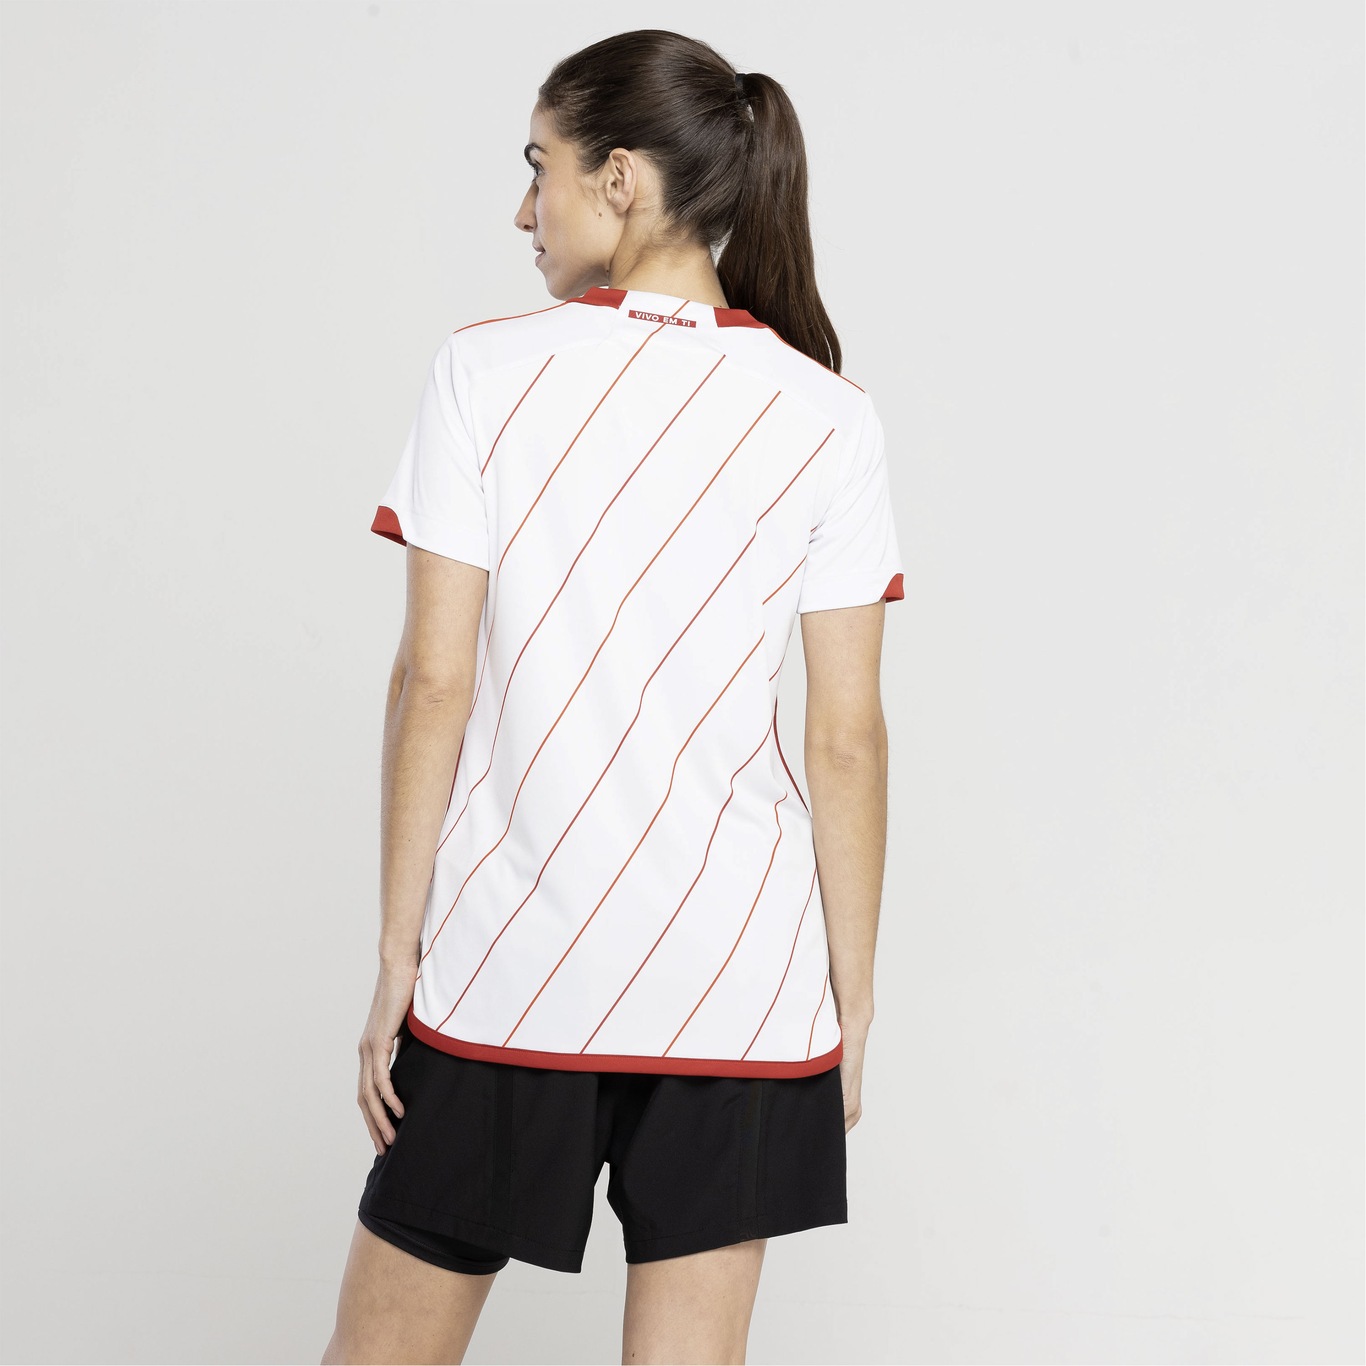 Camisa Internacional 30 Anos da Copa Adidas Feminina - Camisa de